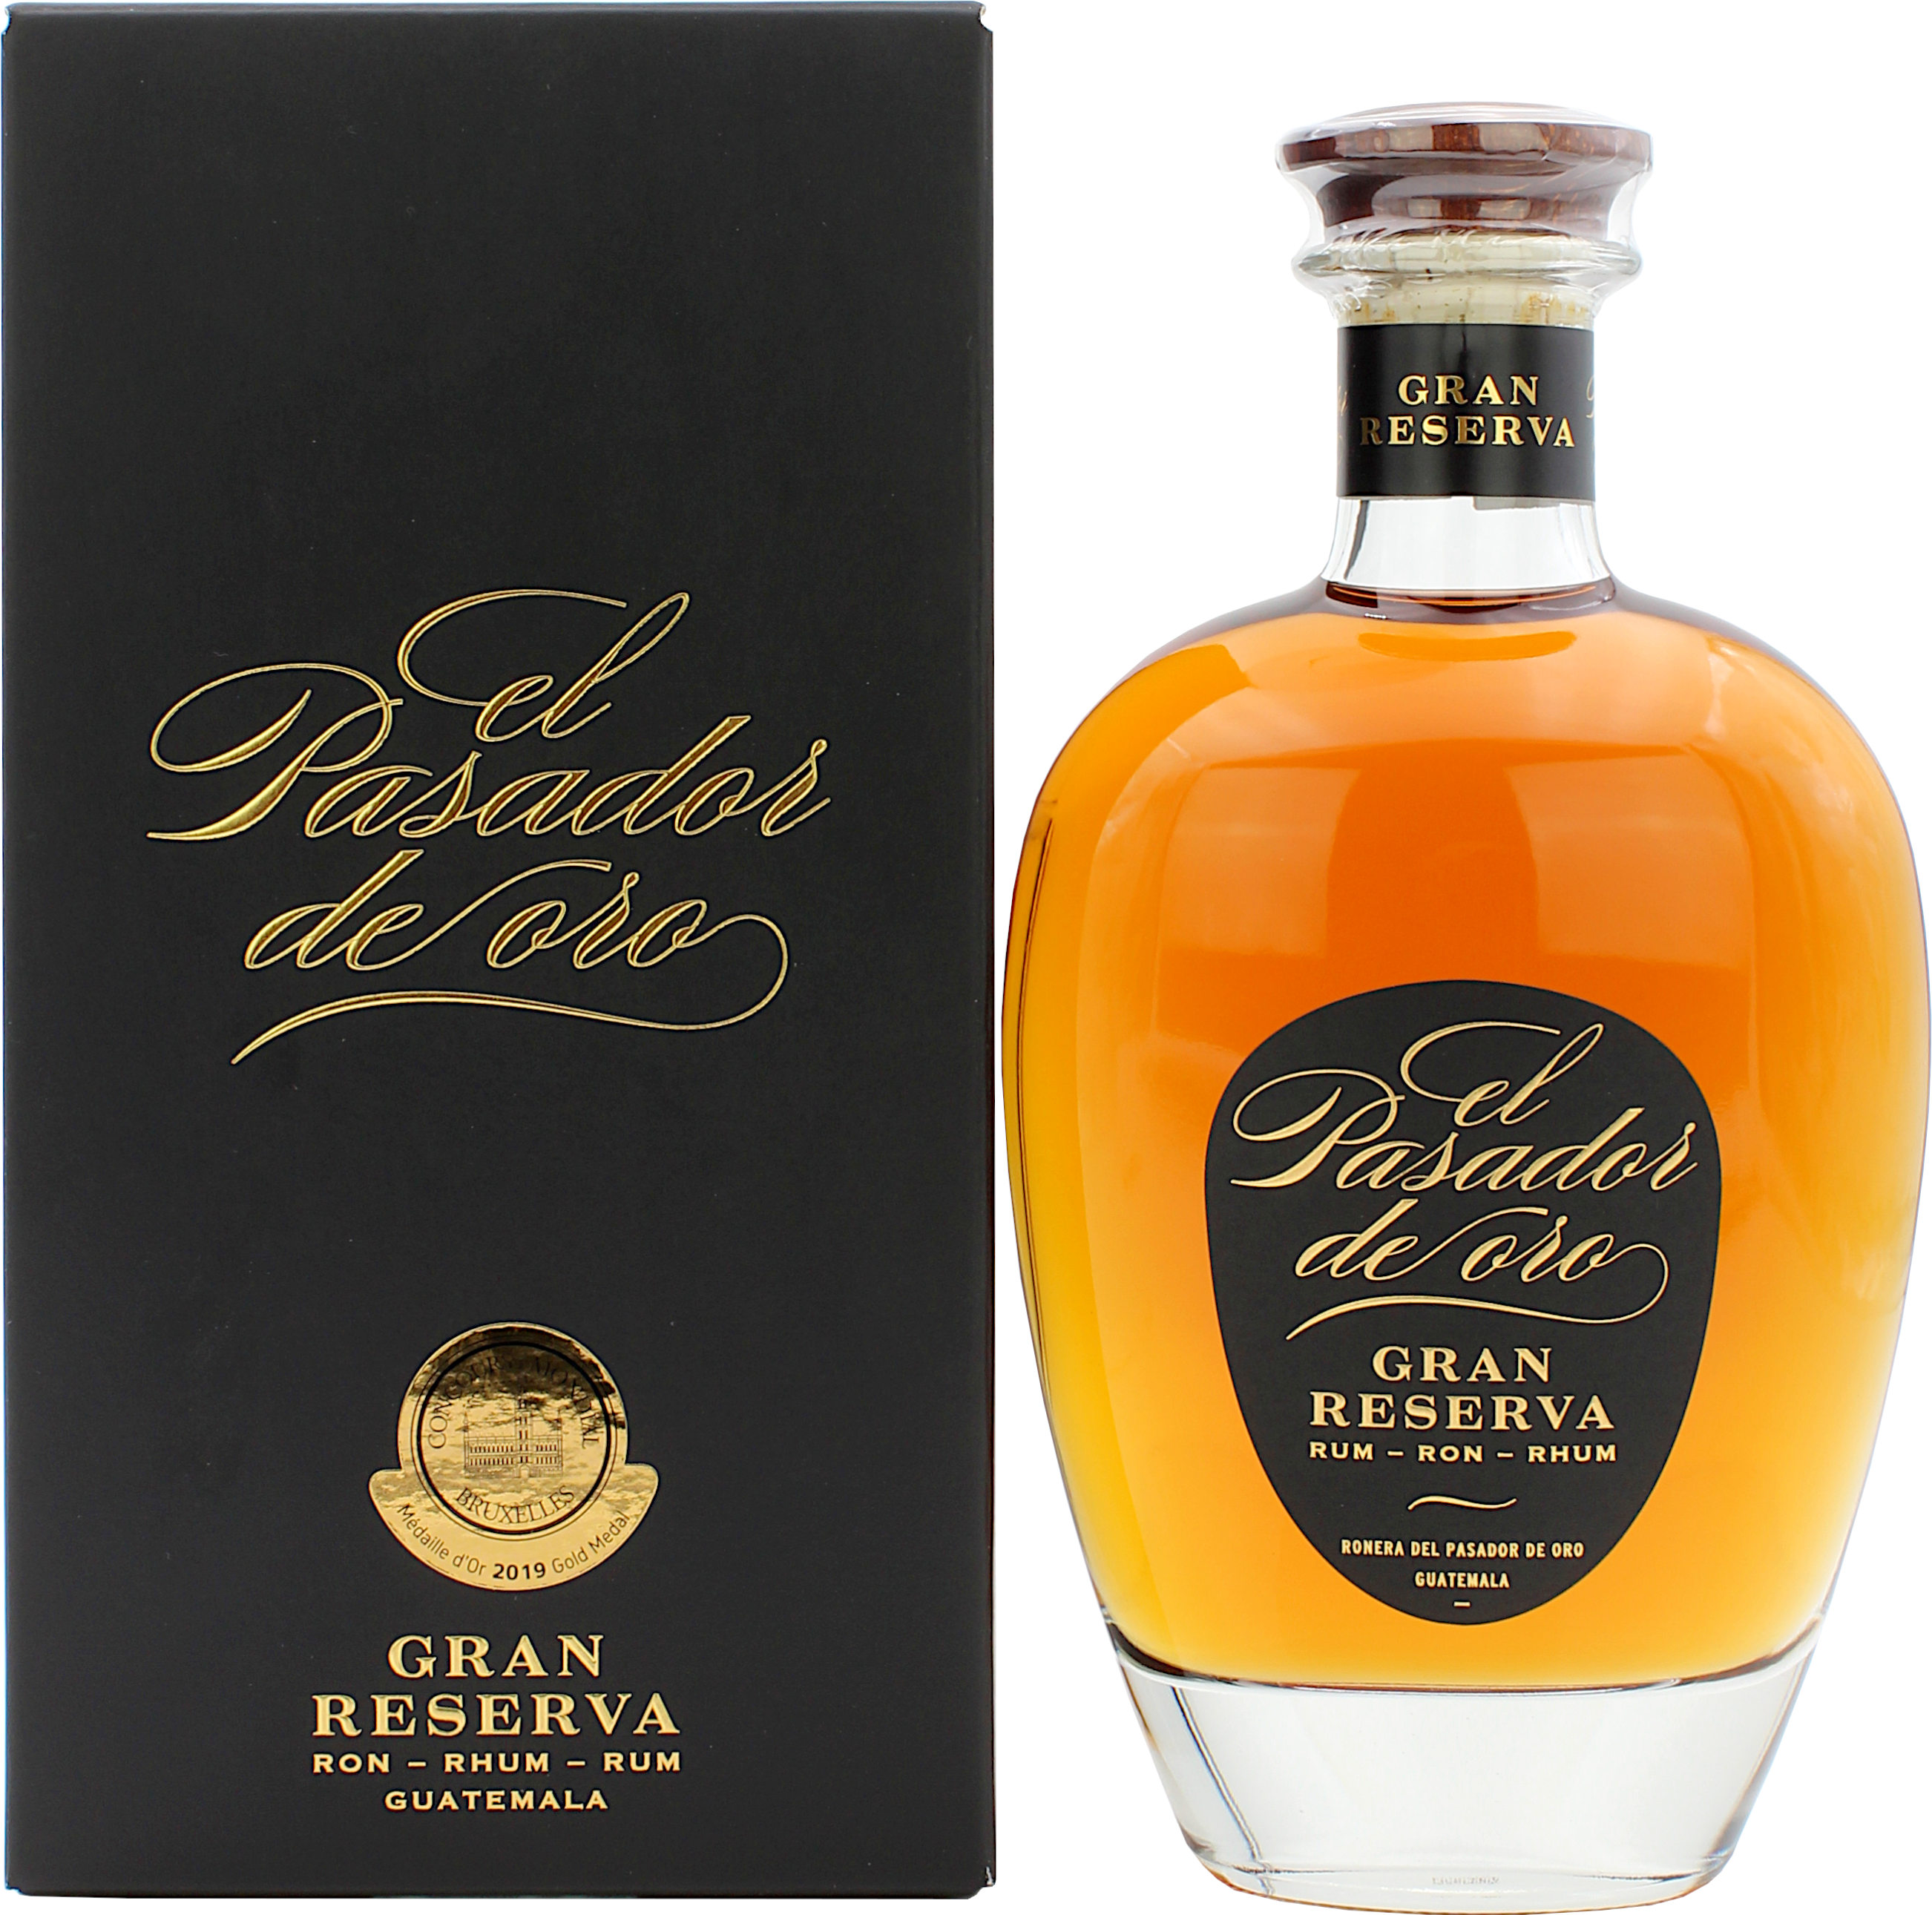 El Pasador De Oro - Gran Reserva | Rum from Guatemala